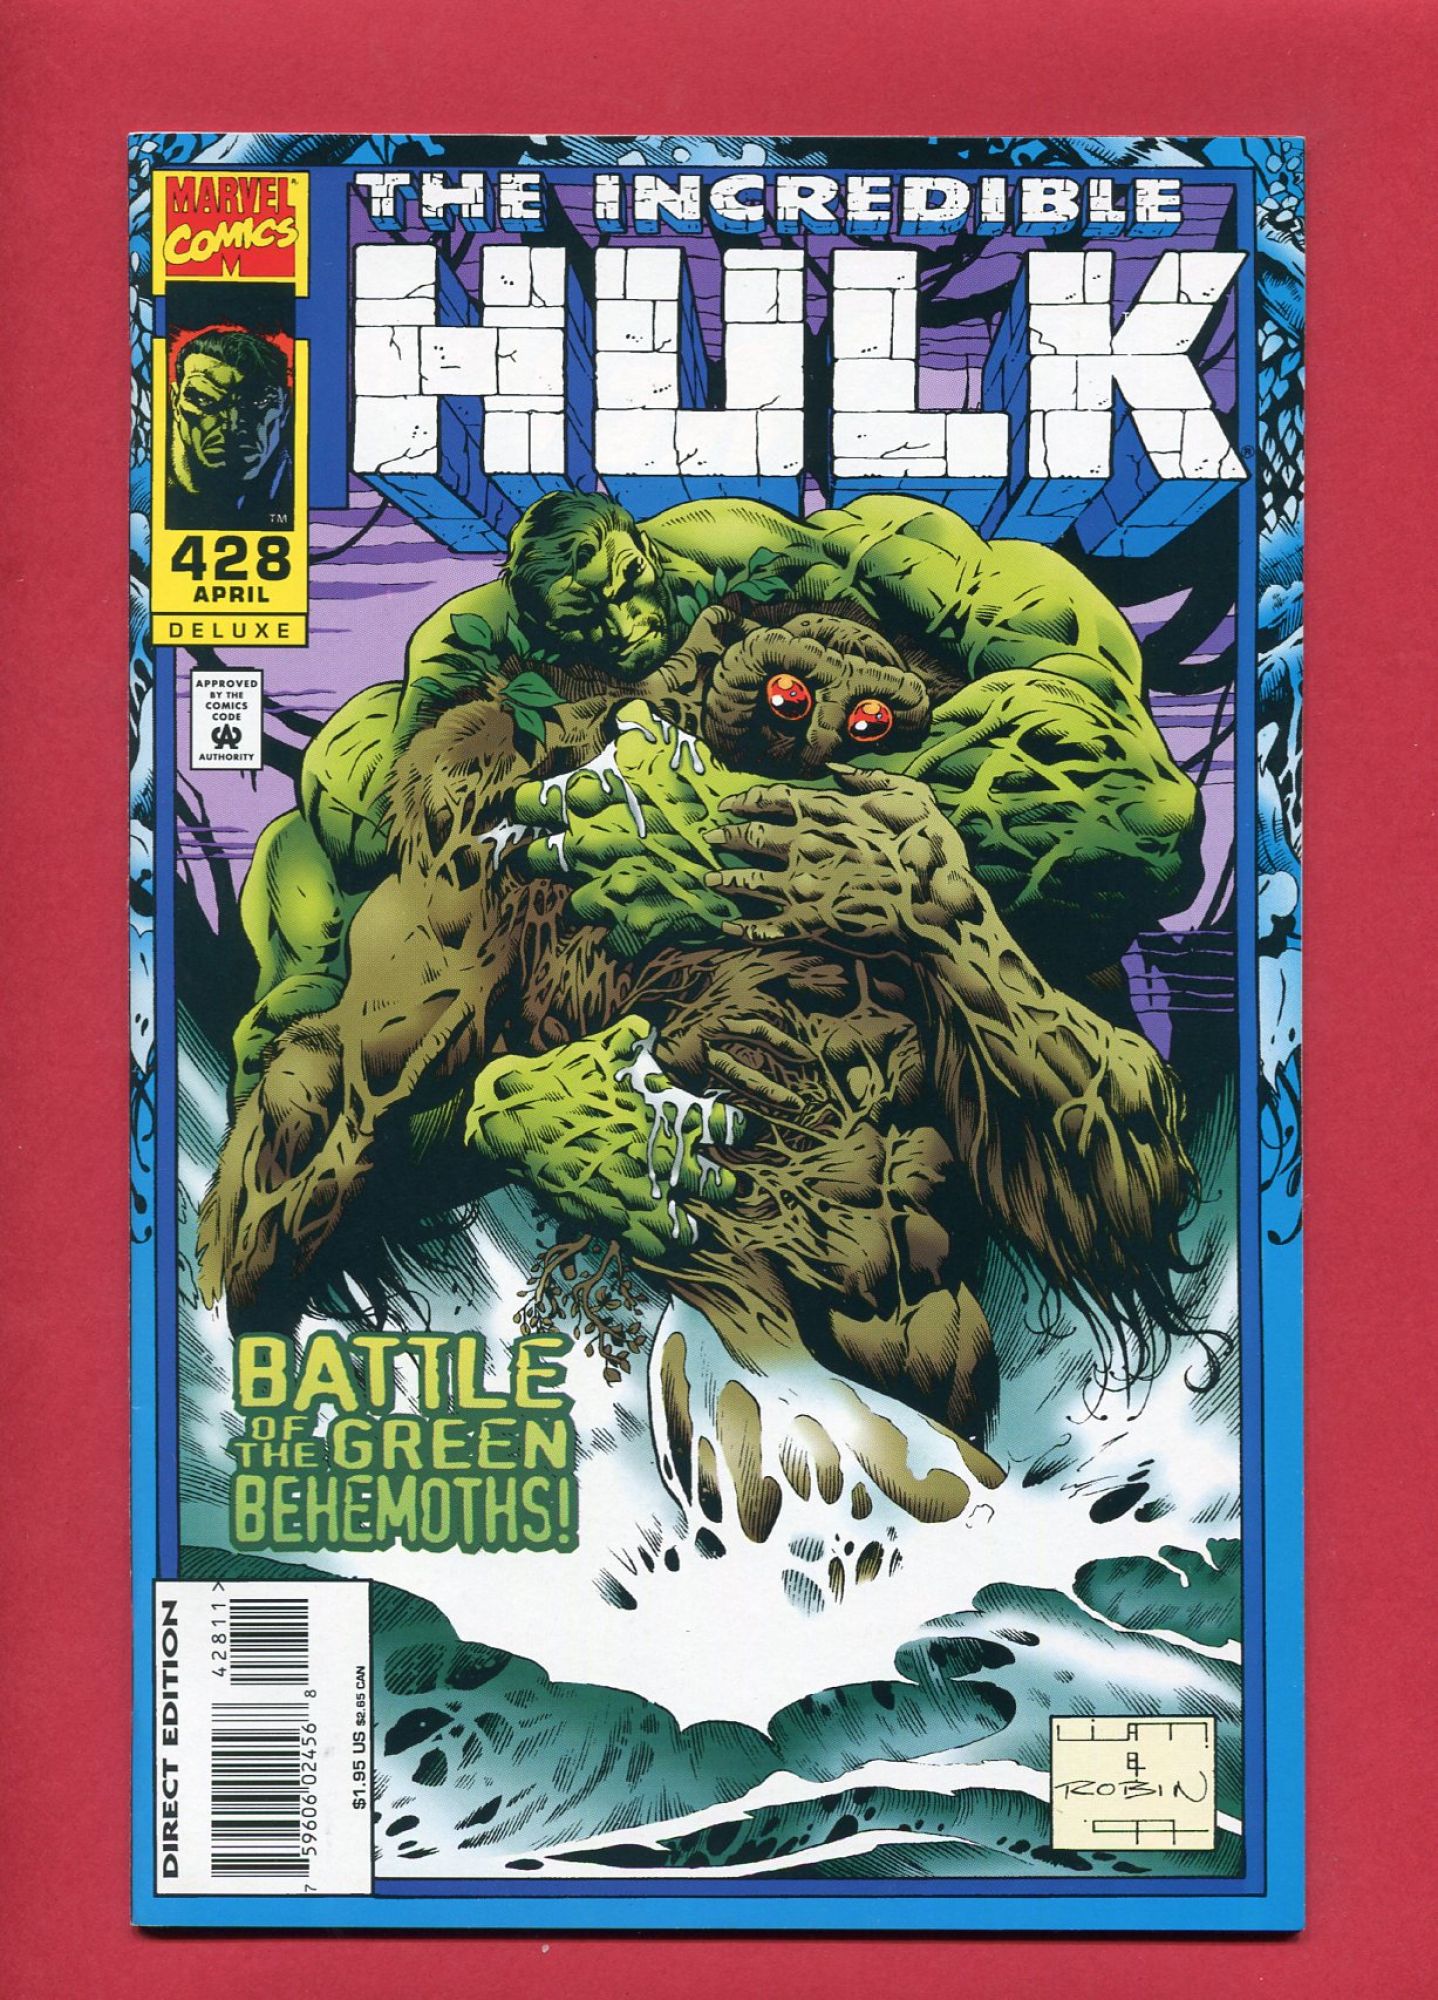 Incredible Hulk #428, Apr 1995, 8.5 VF+